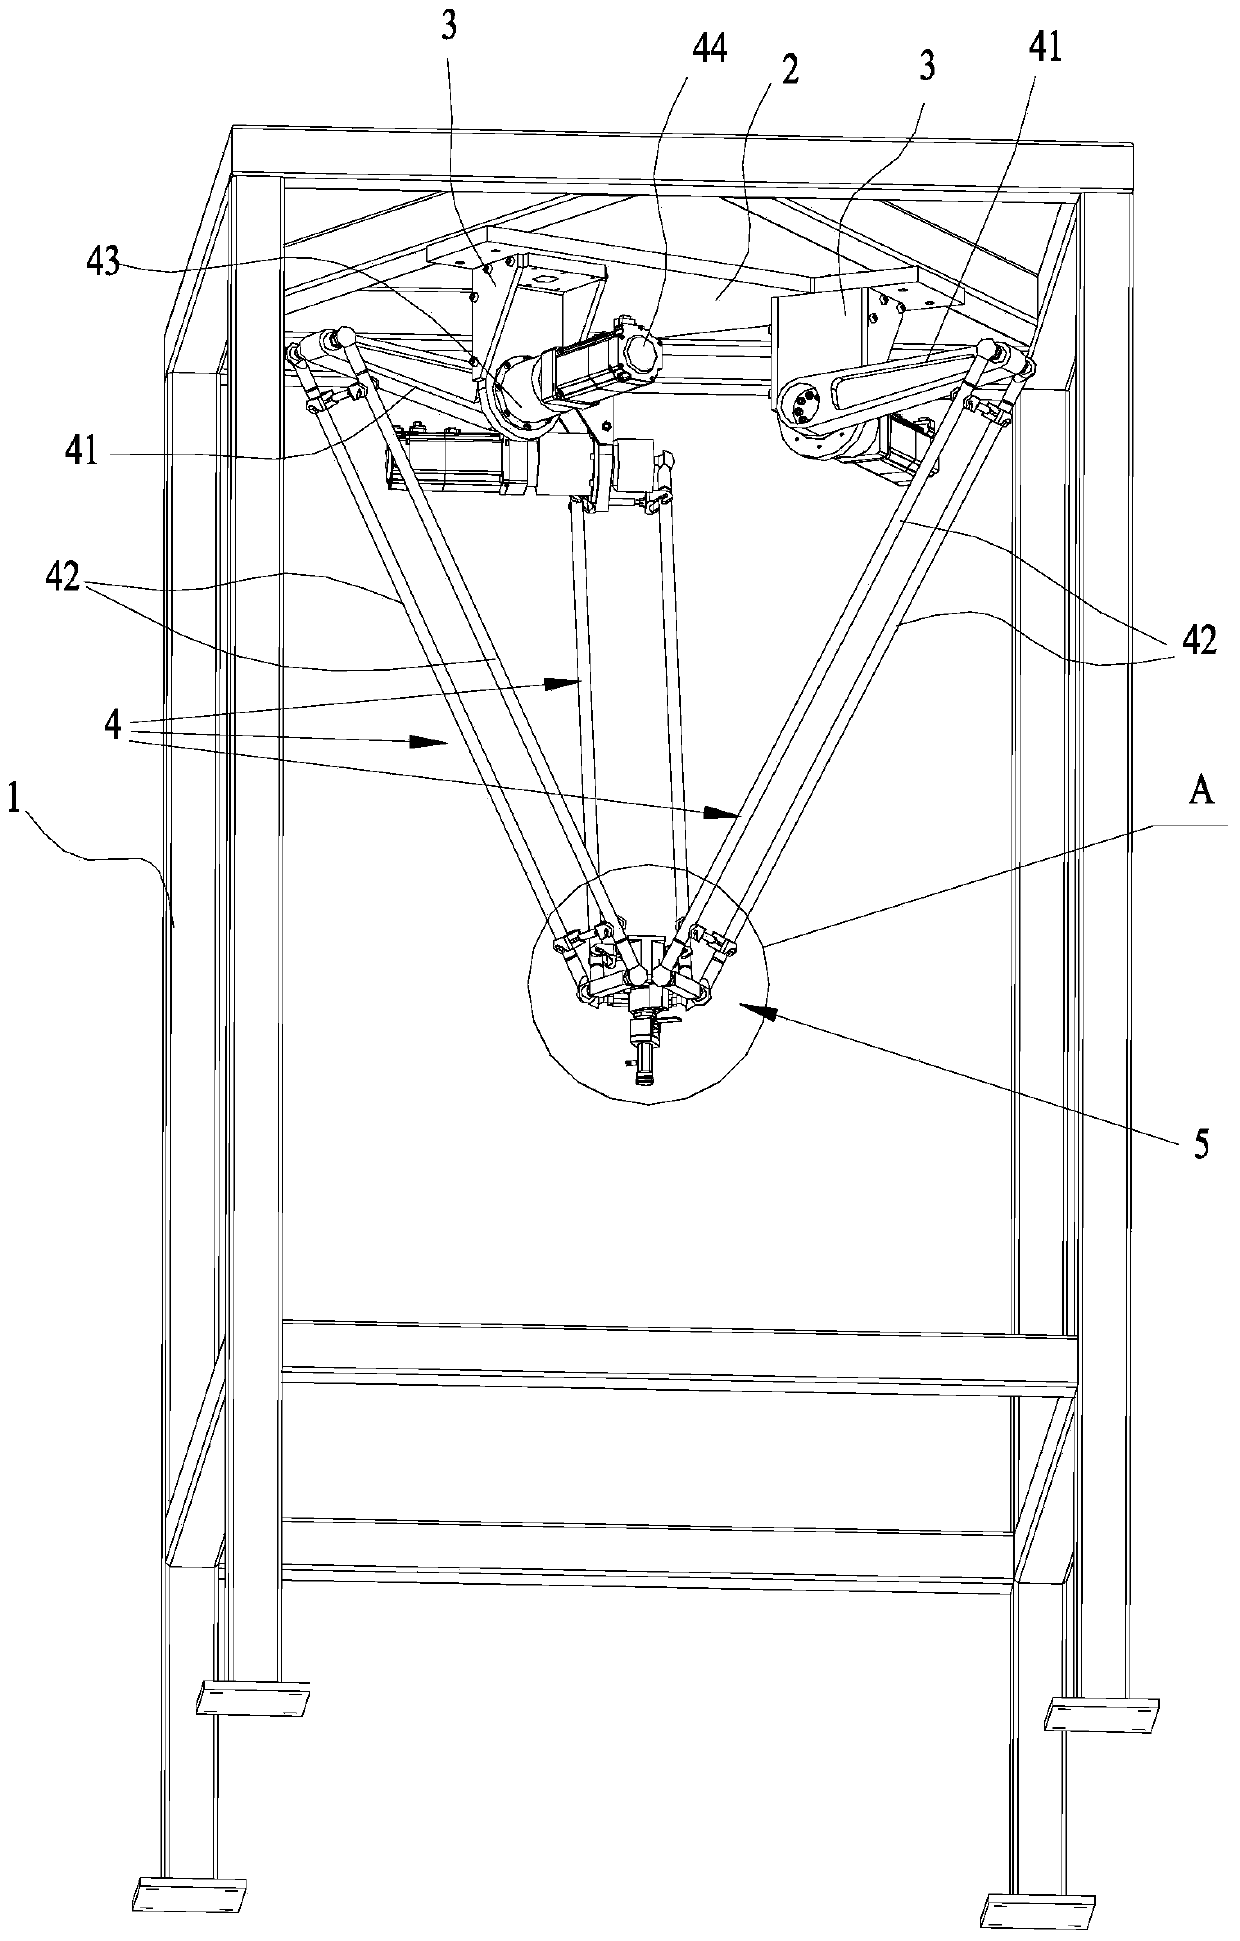 Parallel mechanism arm